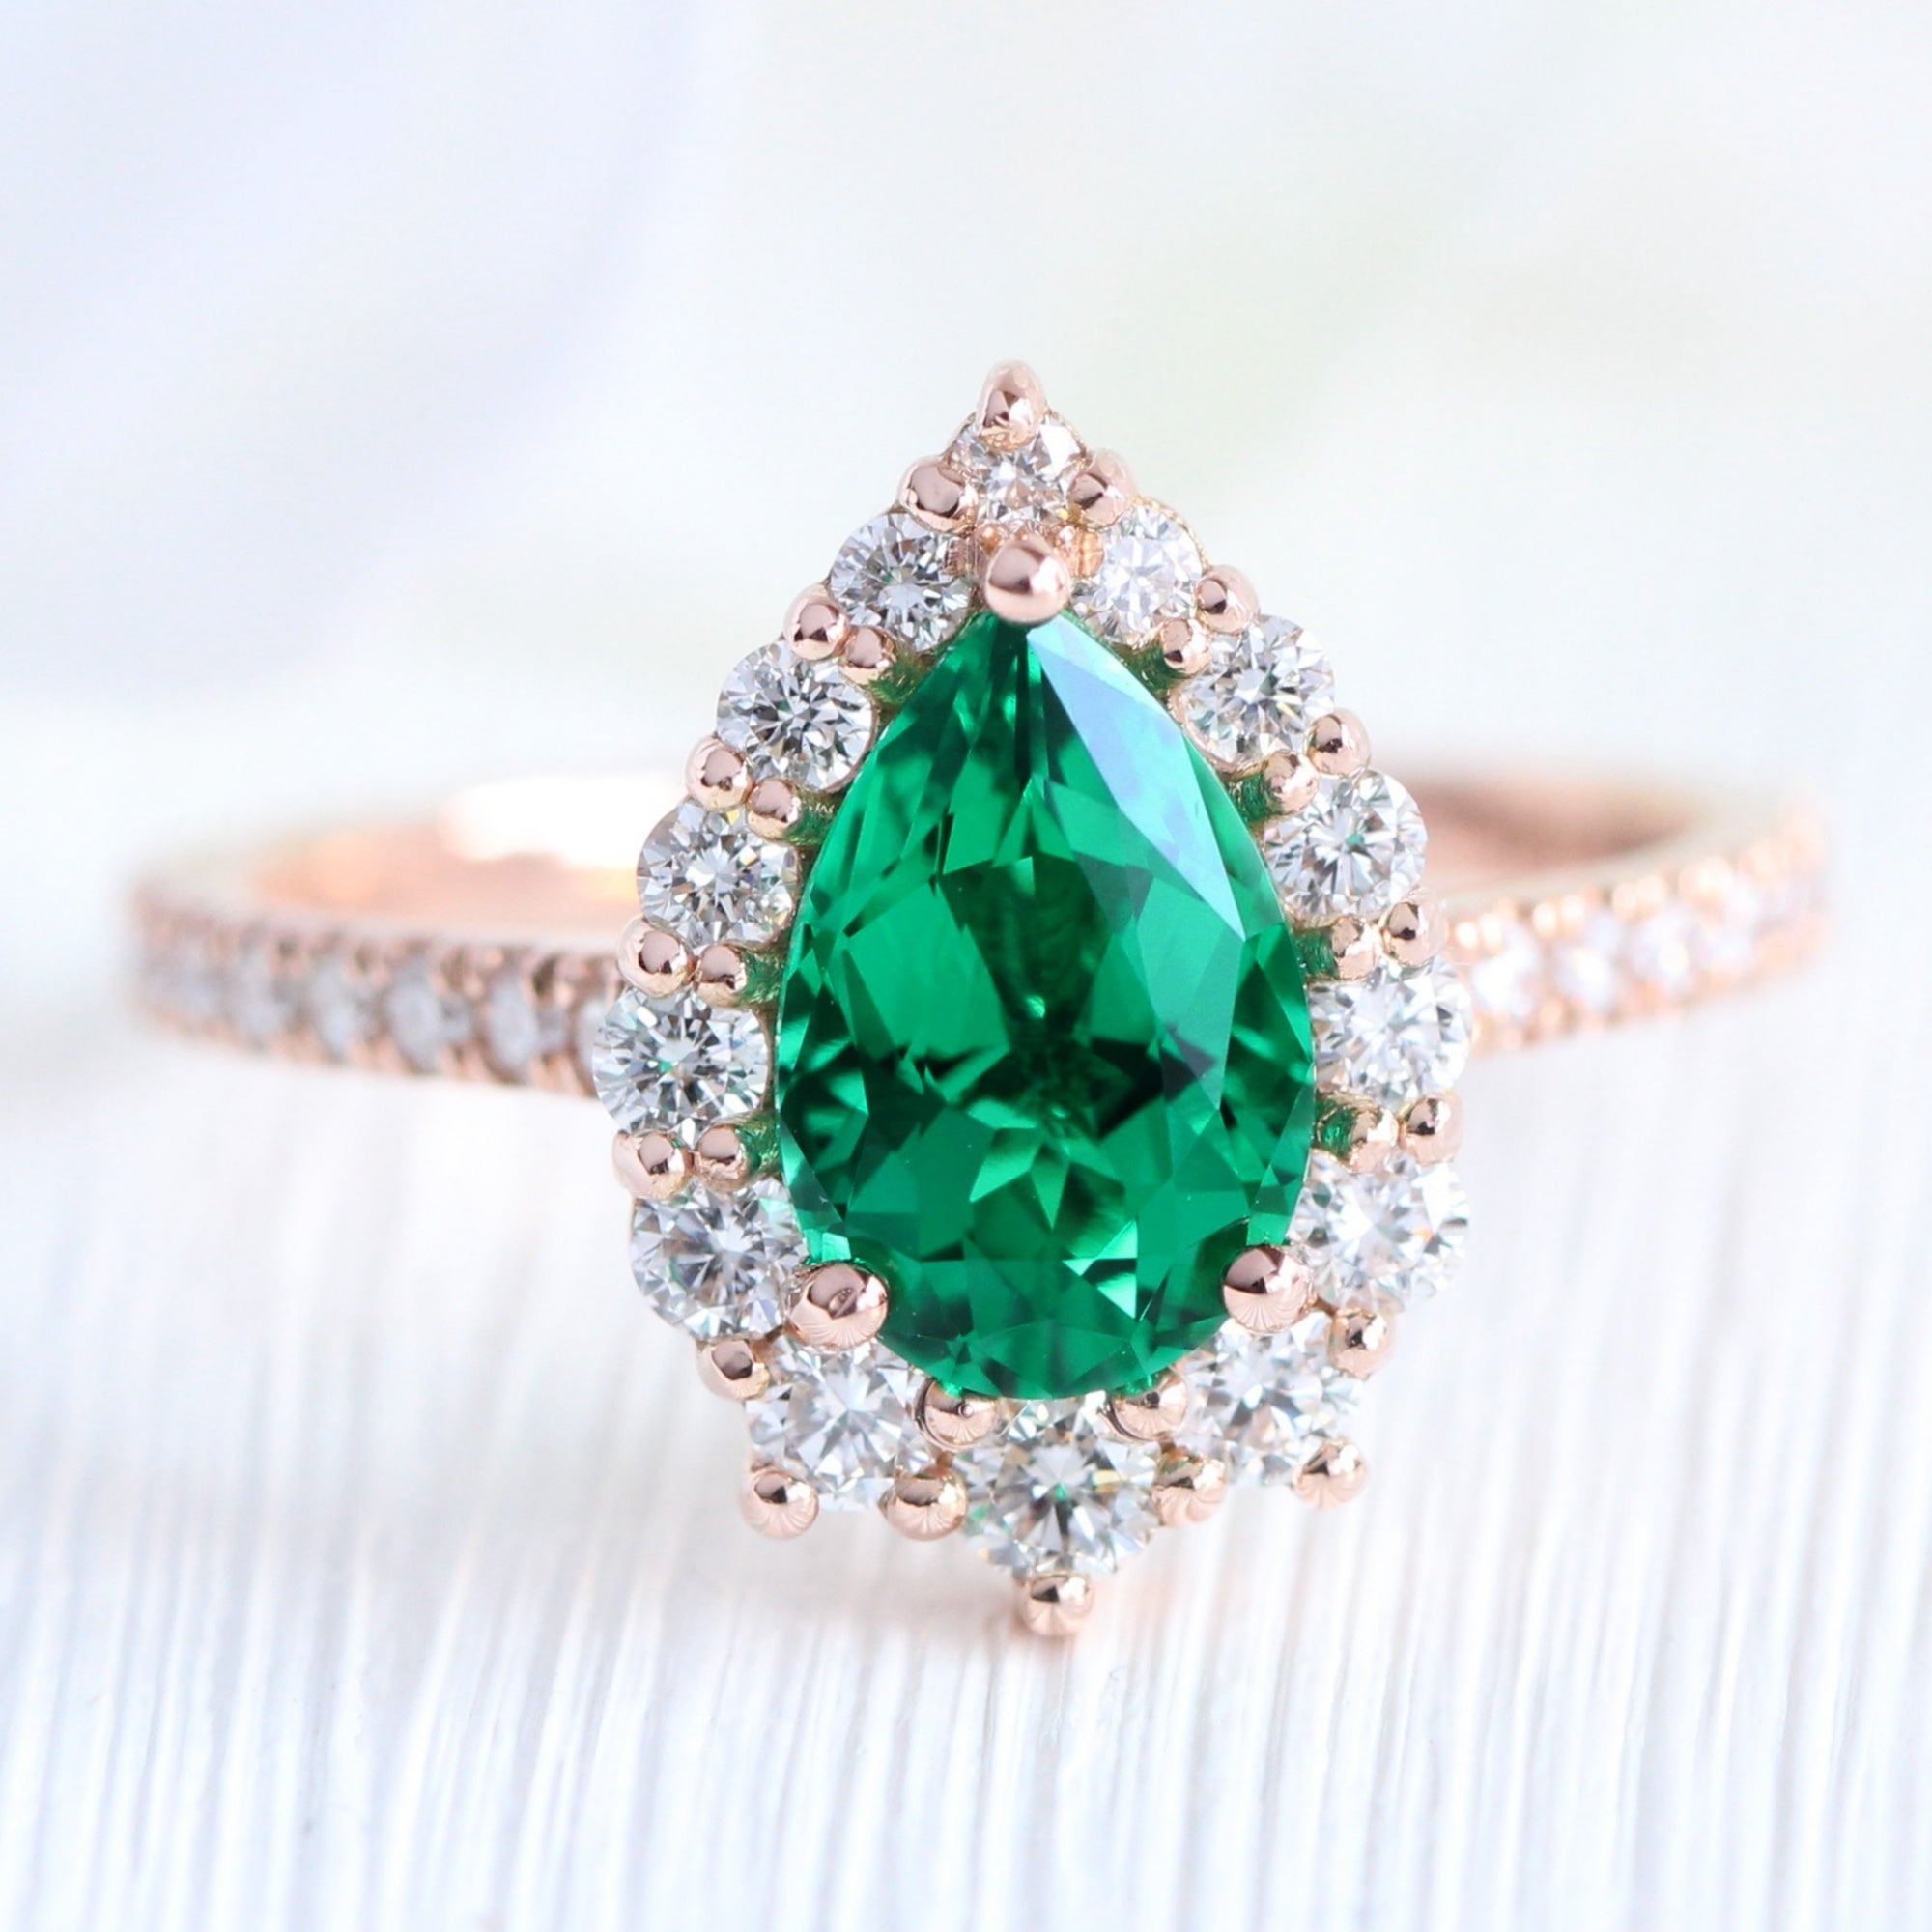 Halo diamond pear emerald ring stock rose gold v shaped wedding band la more design jewelry